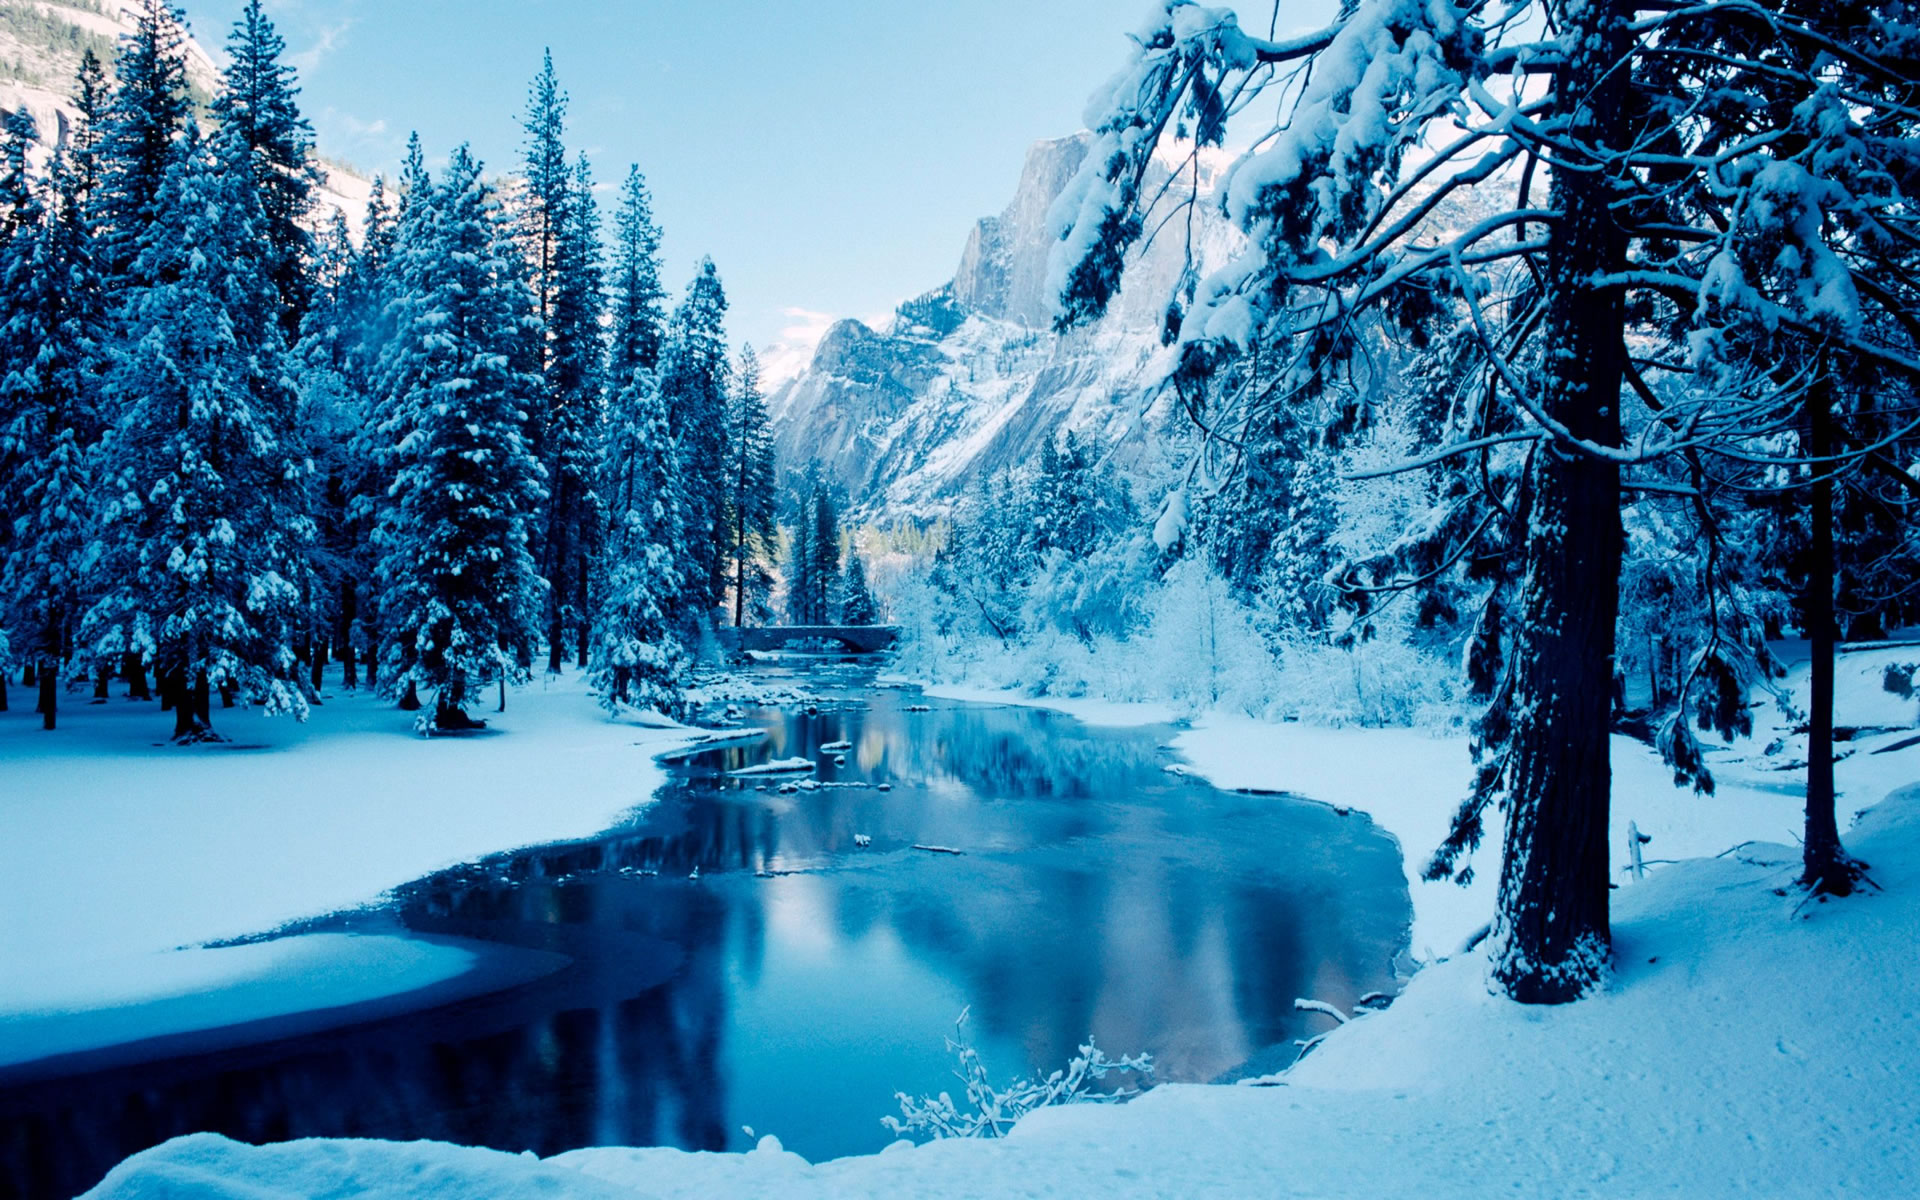 Photos of winter: winter nature